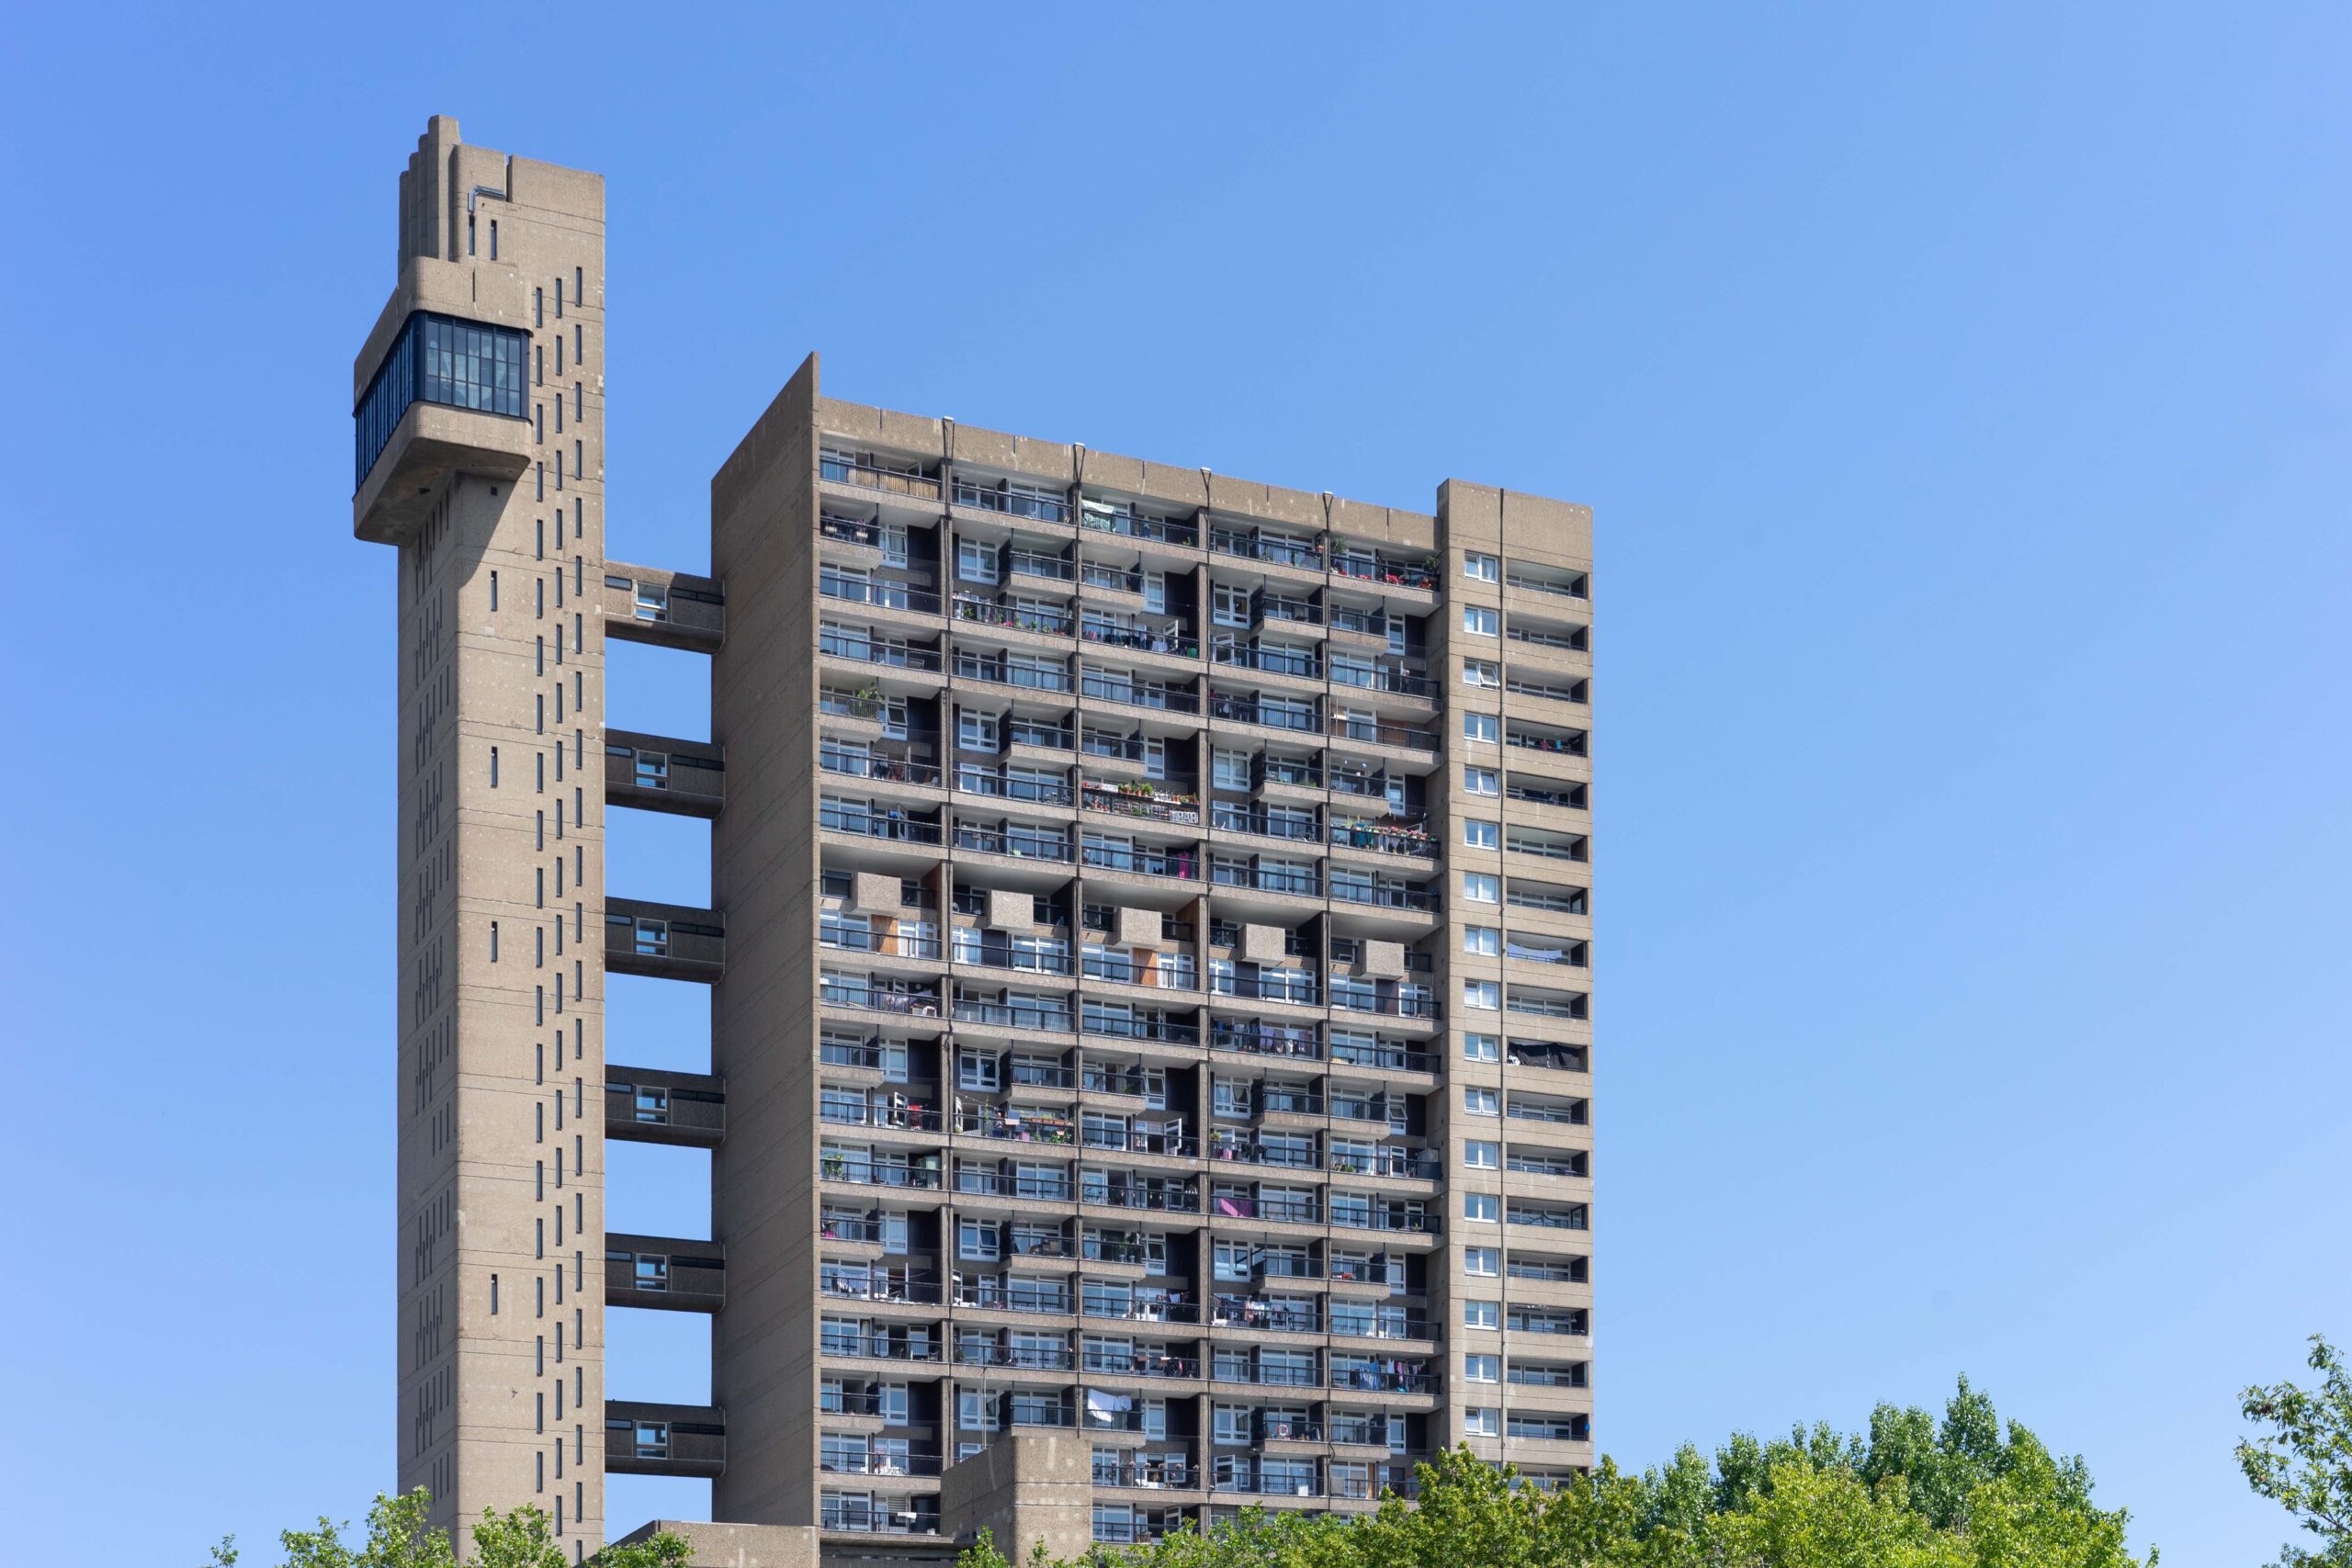 For Rent: Trellick Tower North Kensington W10 brutalist exterior by Erno Goldfinger